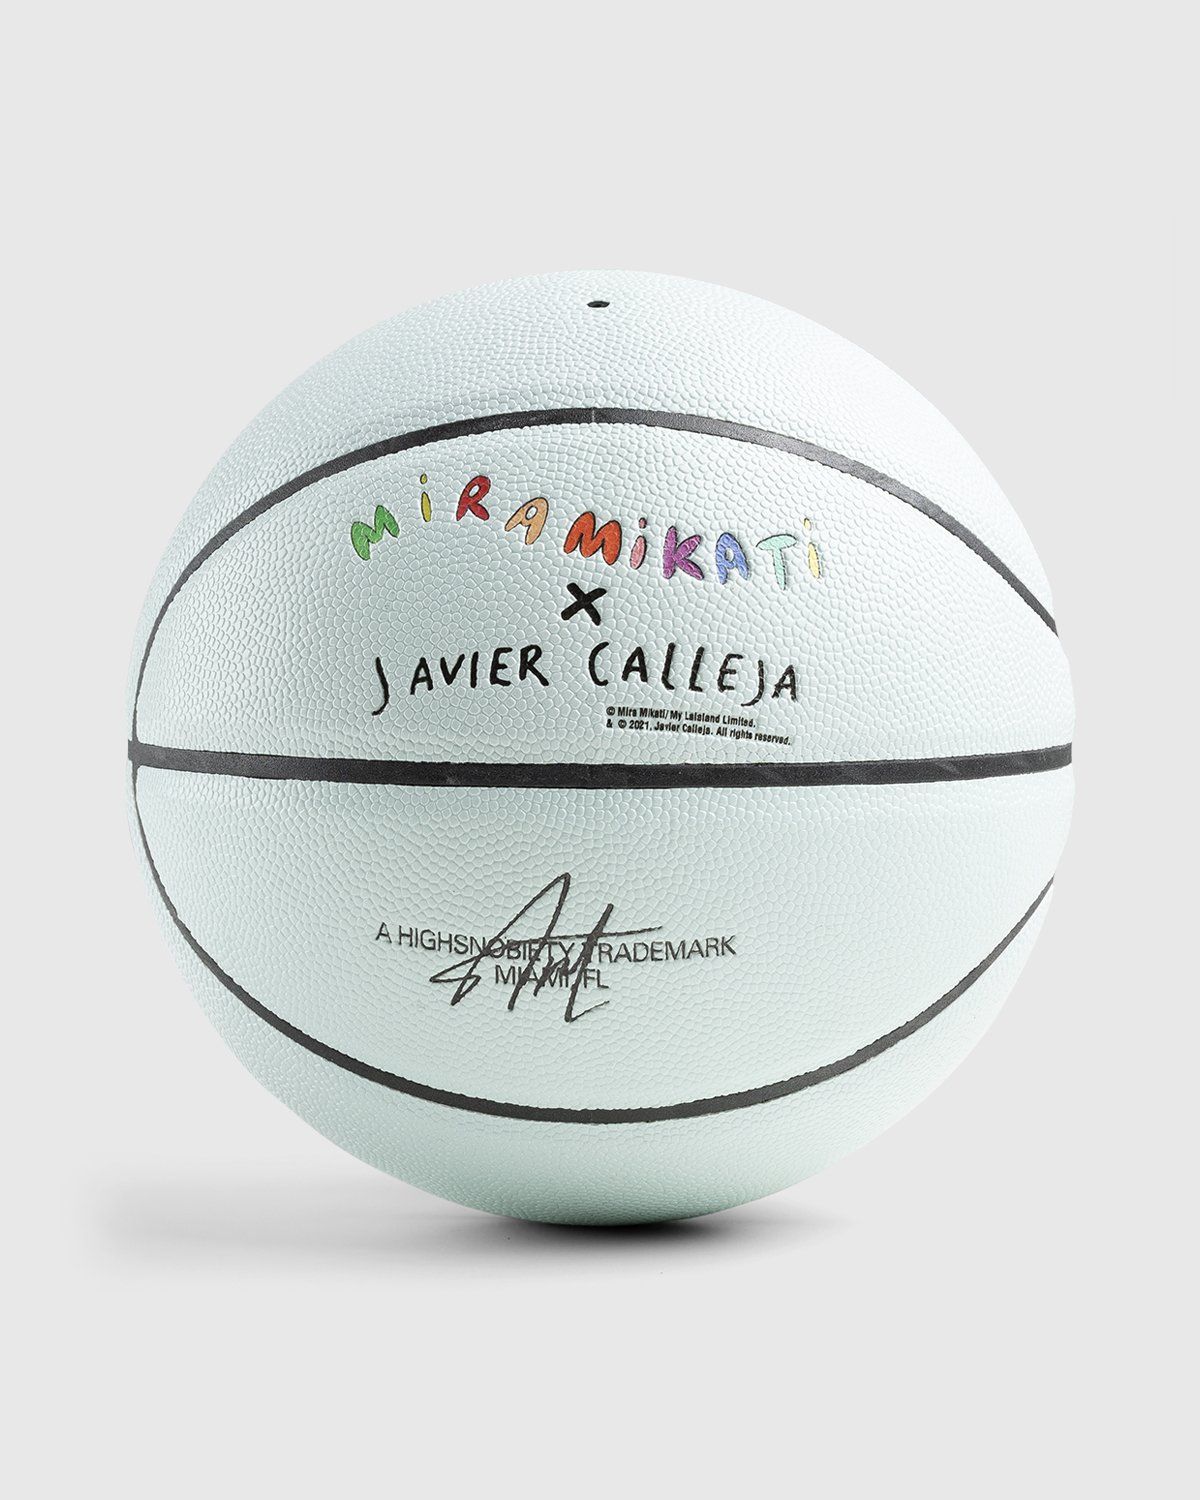 Javier Calleja x Mira Mikati x Highsnobiety – Basketball - Sports Gear - Blue - Image 2